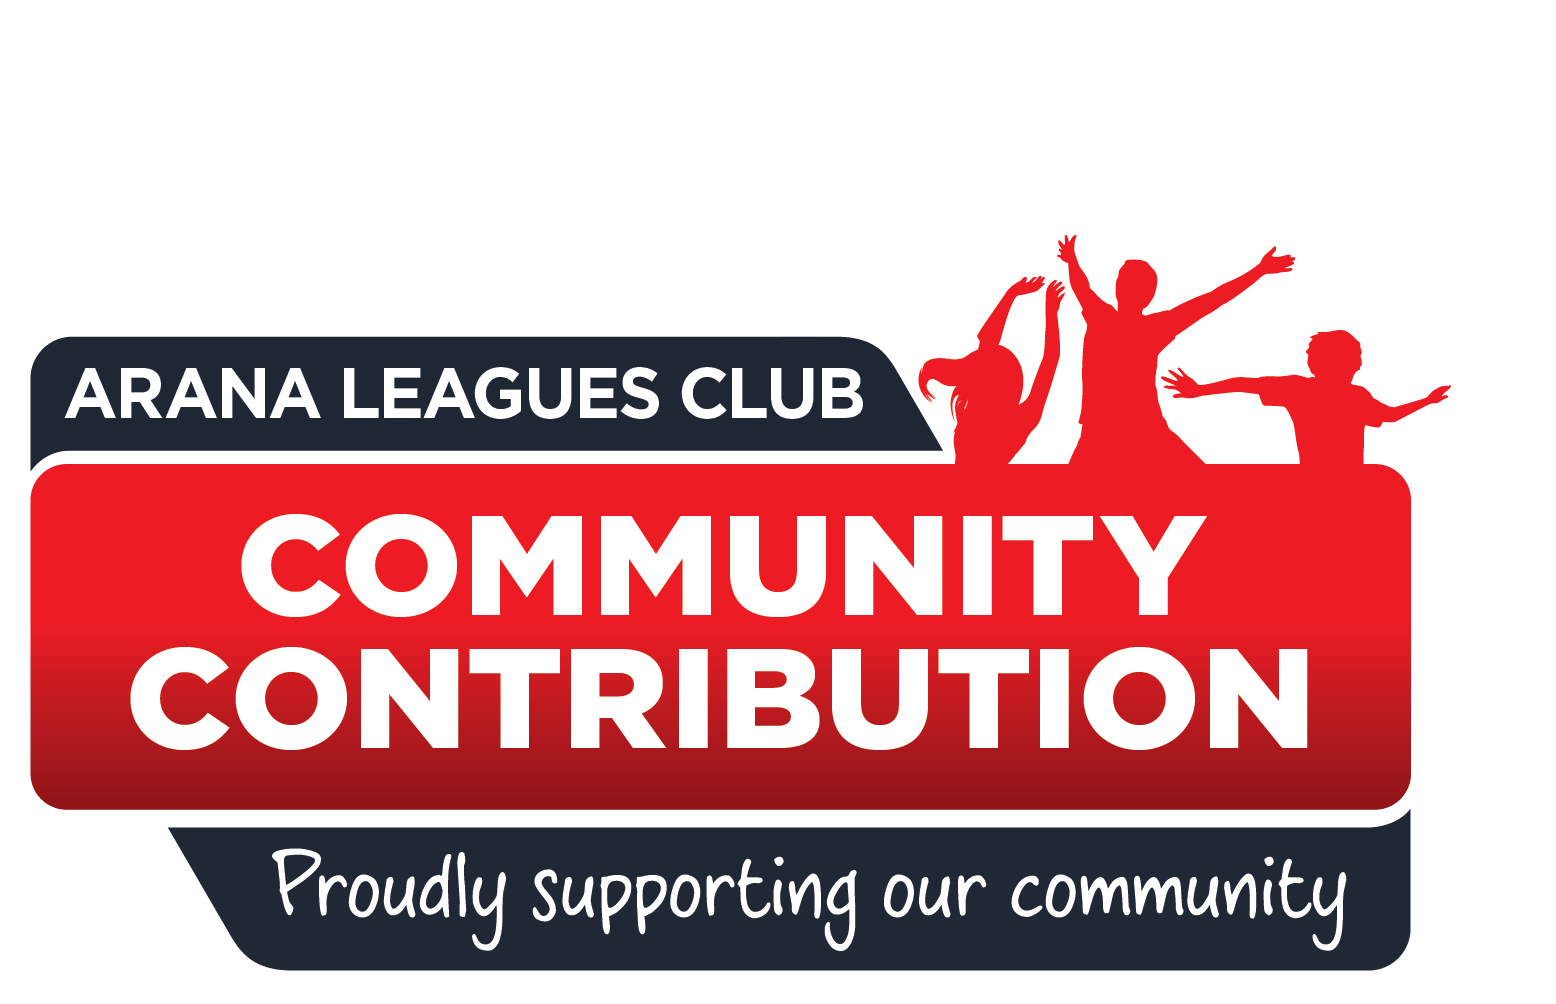 Community Contributions